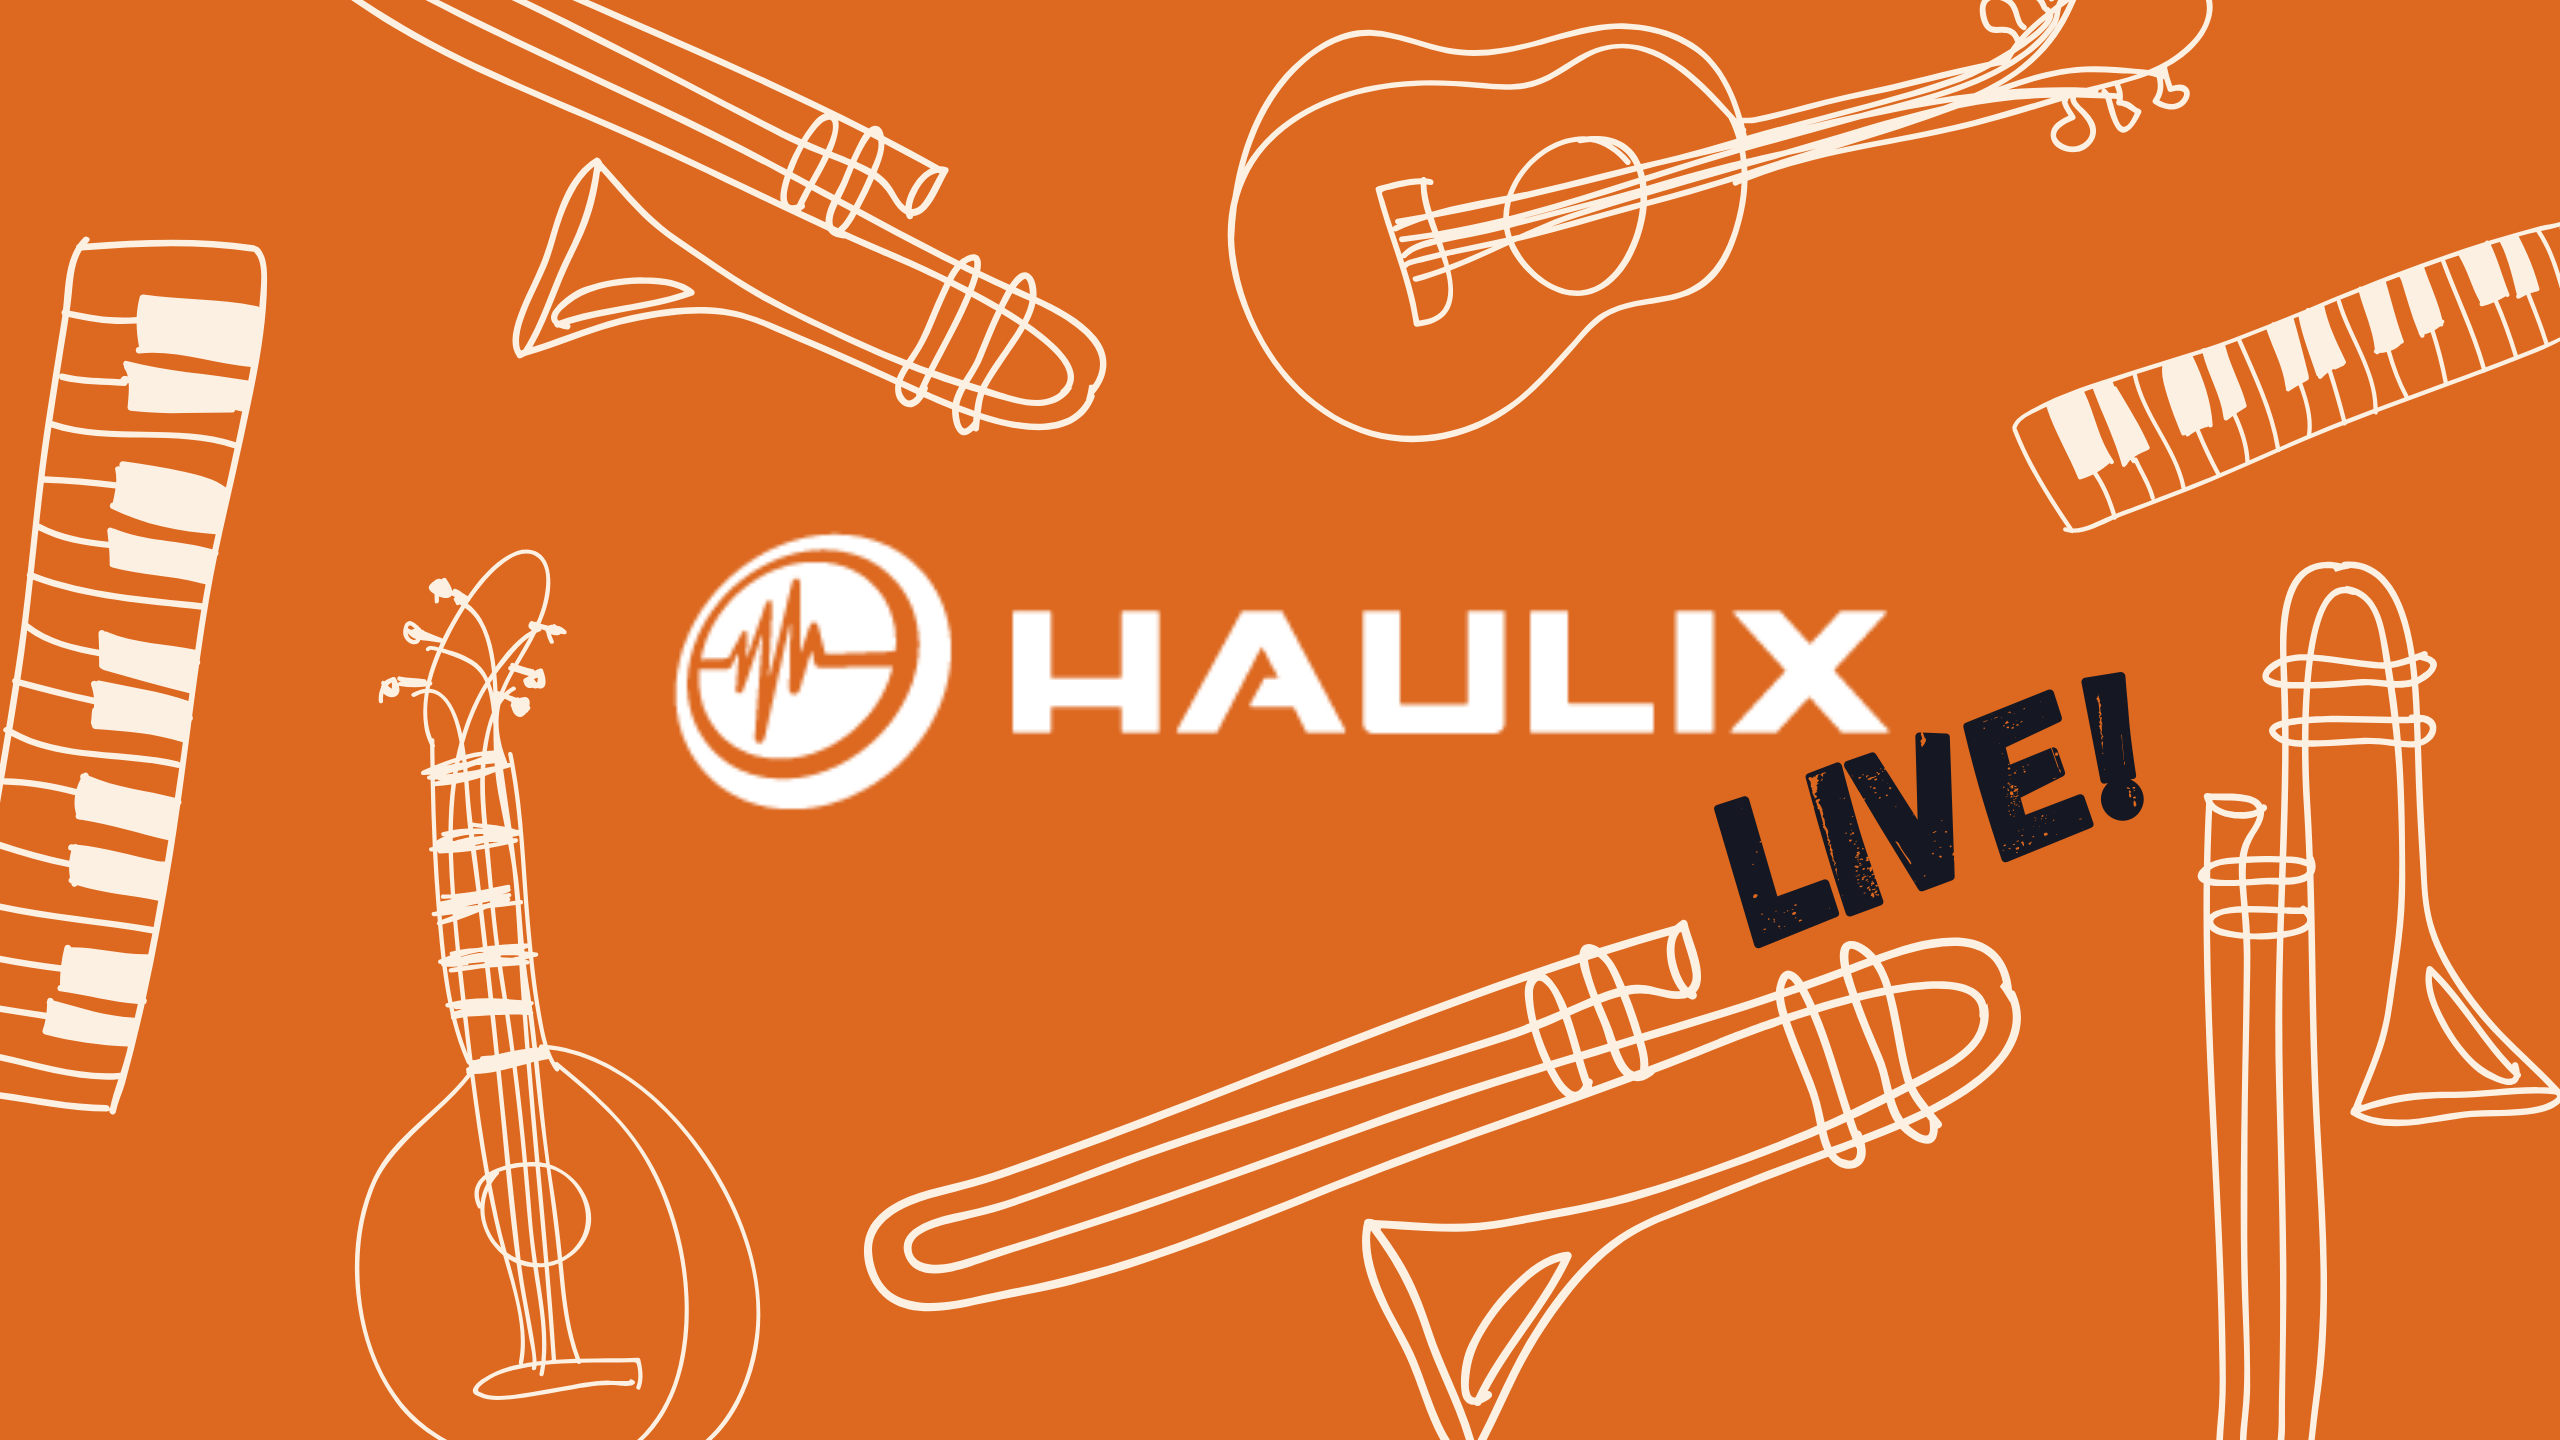 Haulix LIVE! 2 music panel